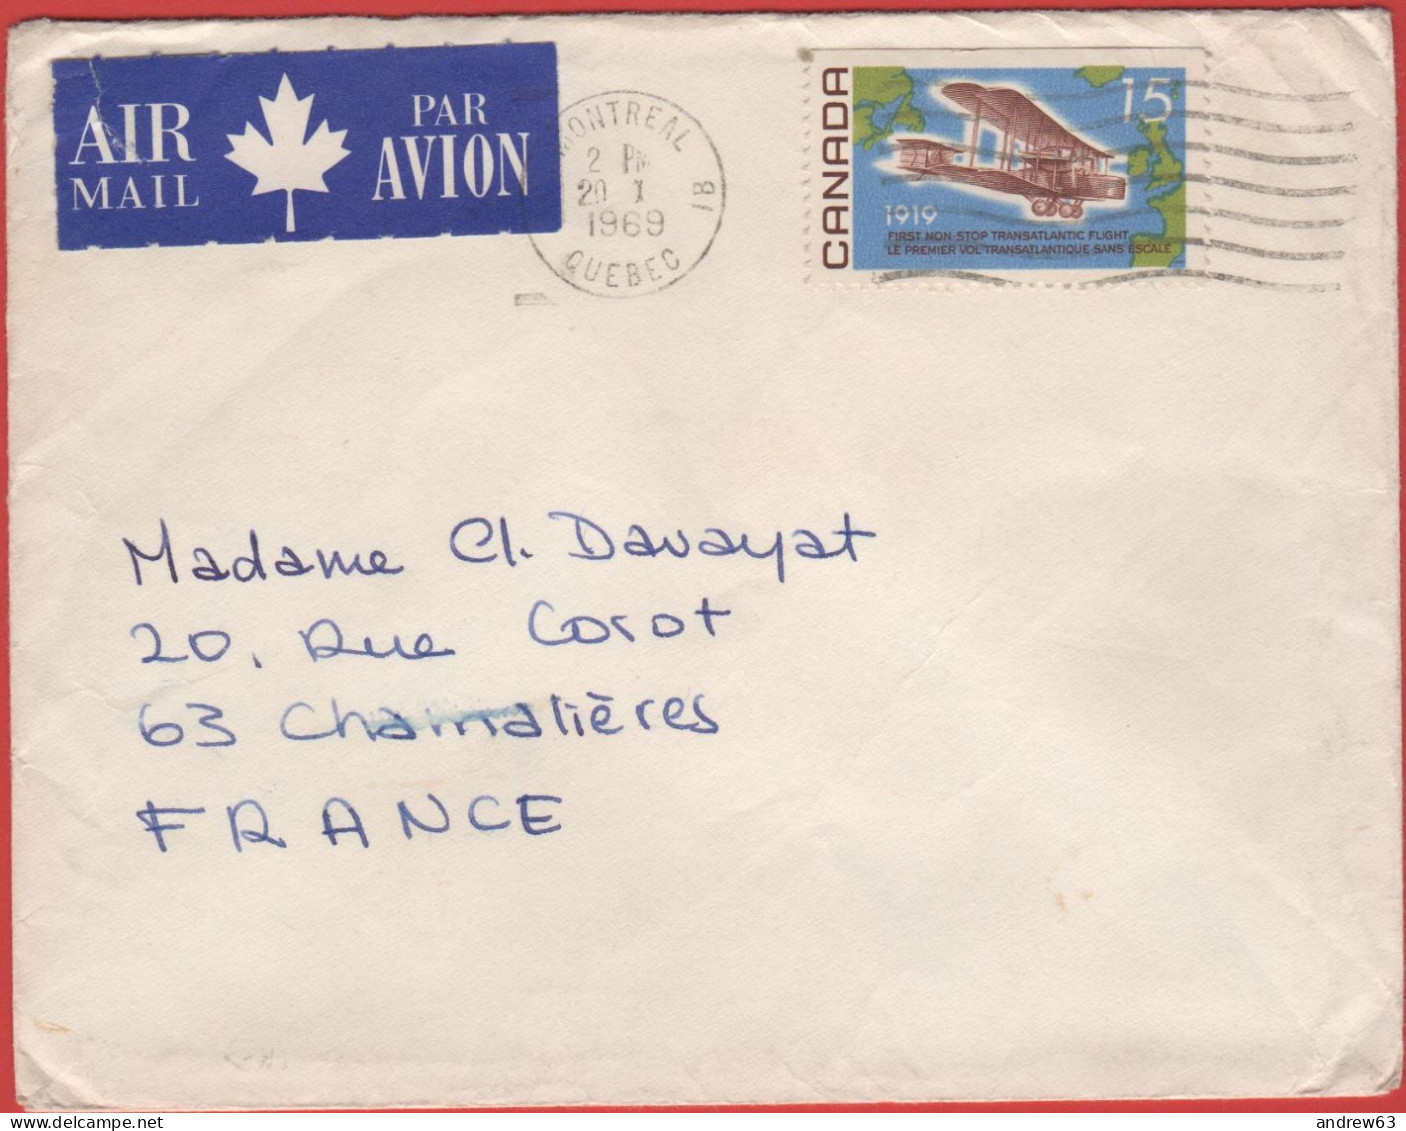 CANADA - 1969 - 15c First Non Stop Transatlantic Flight - Air Mail - Viaggiata Da Montreal Per Chamalières, France - Covers & Documents